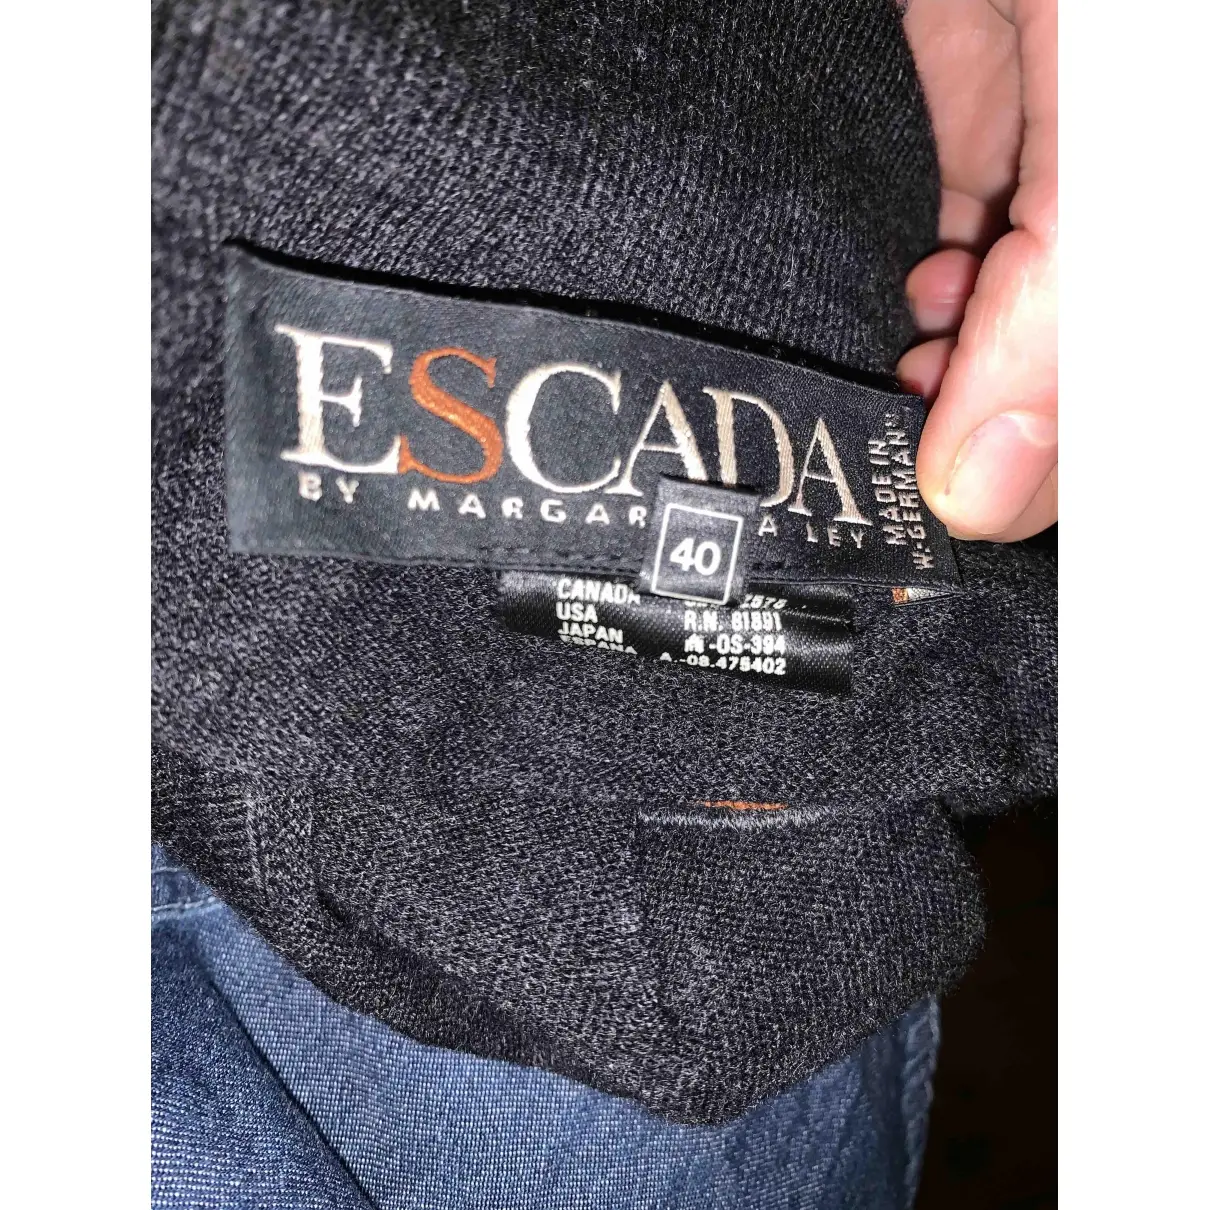 Buy Escada Cashmere jumper online - Vintage